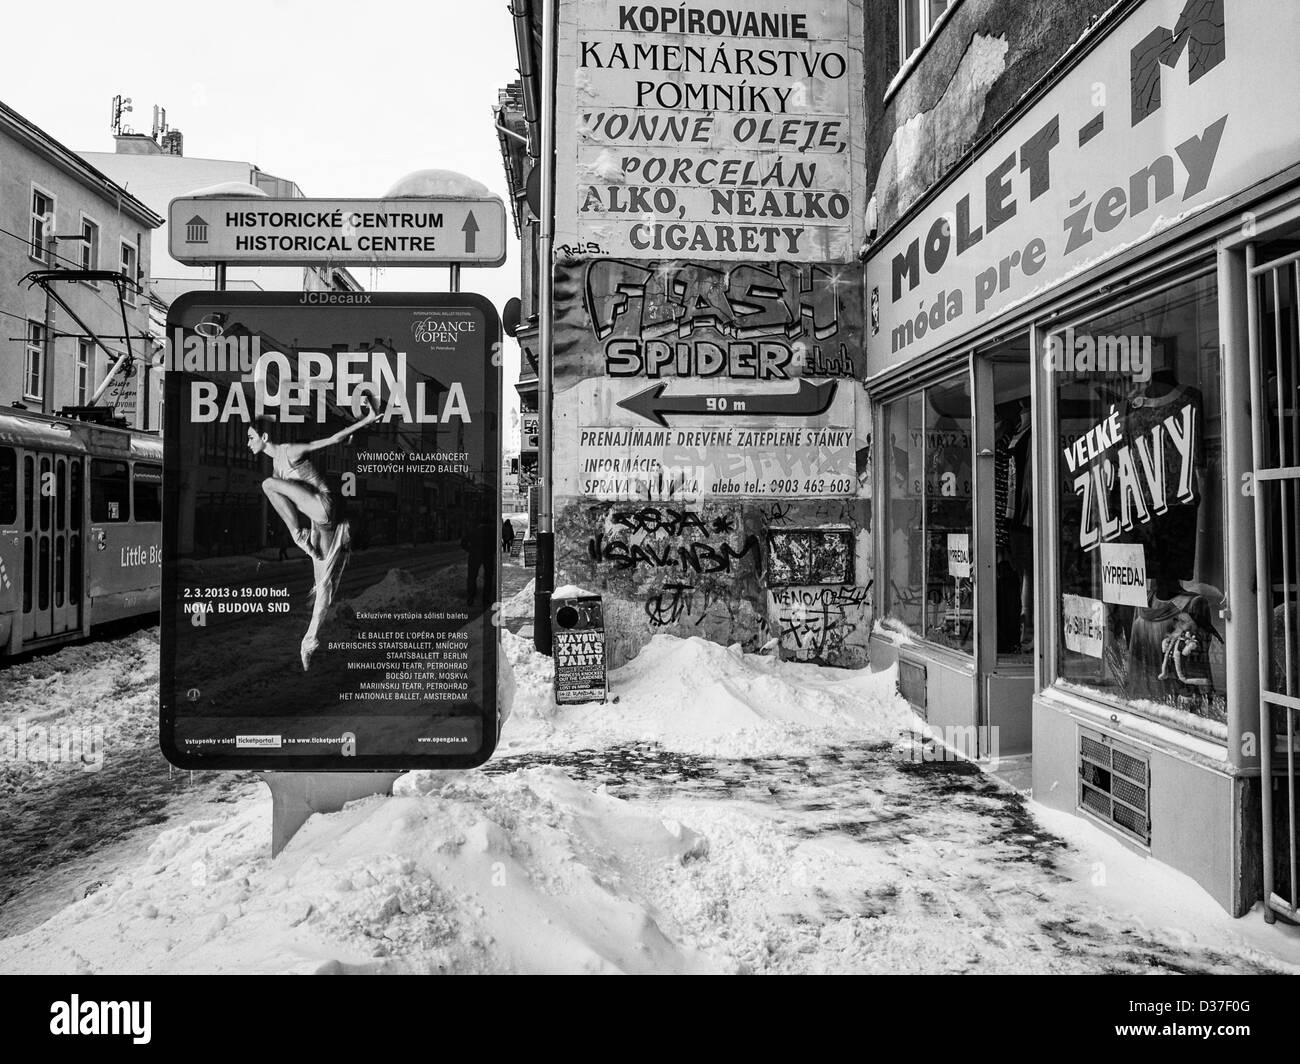 Ballet poster nad a Molet shopn with big size cloths on Obchodna street Btartislava Stock Photo